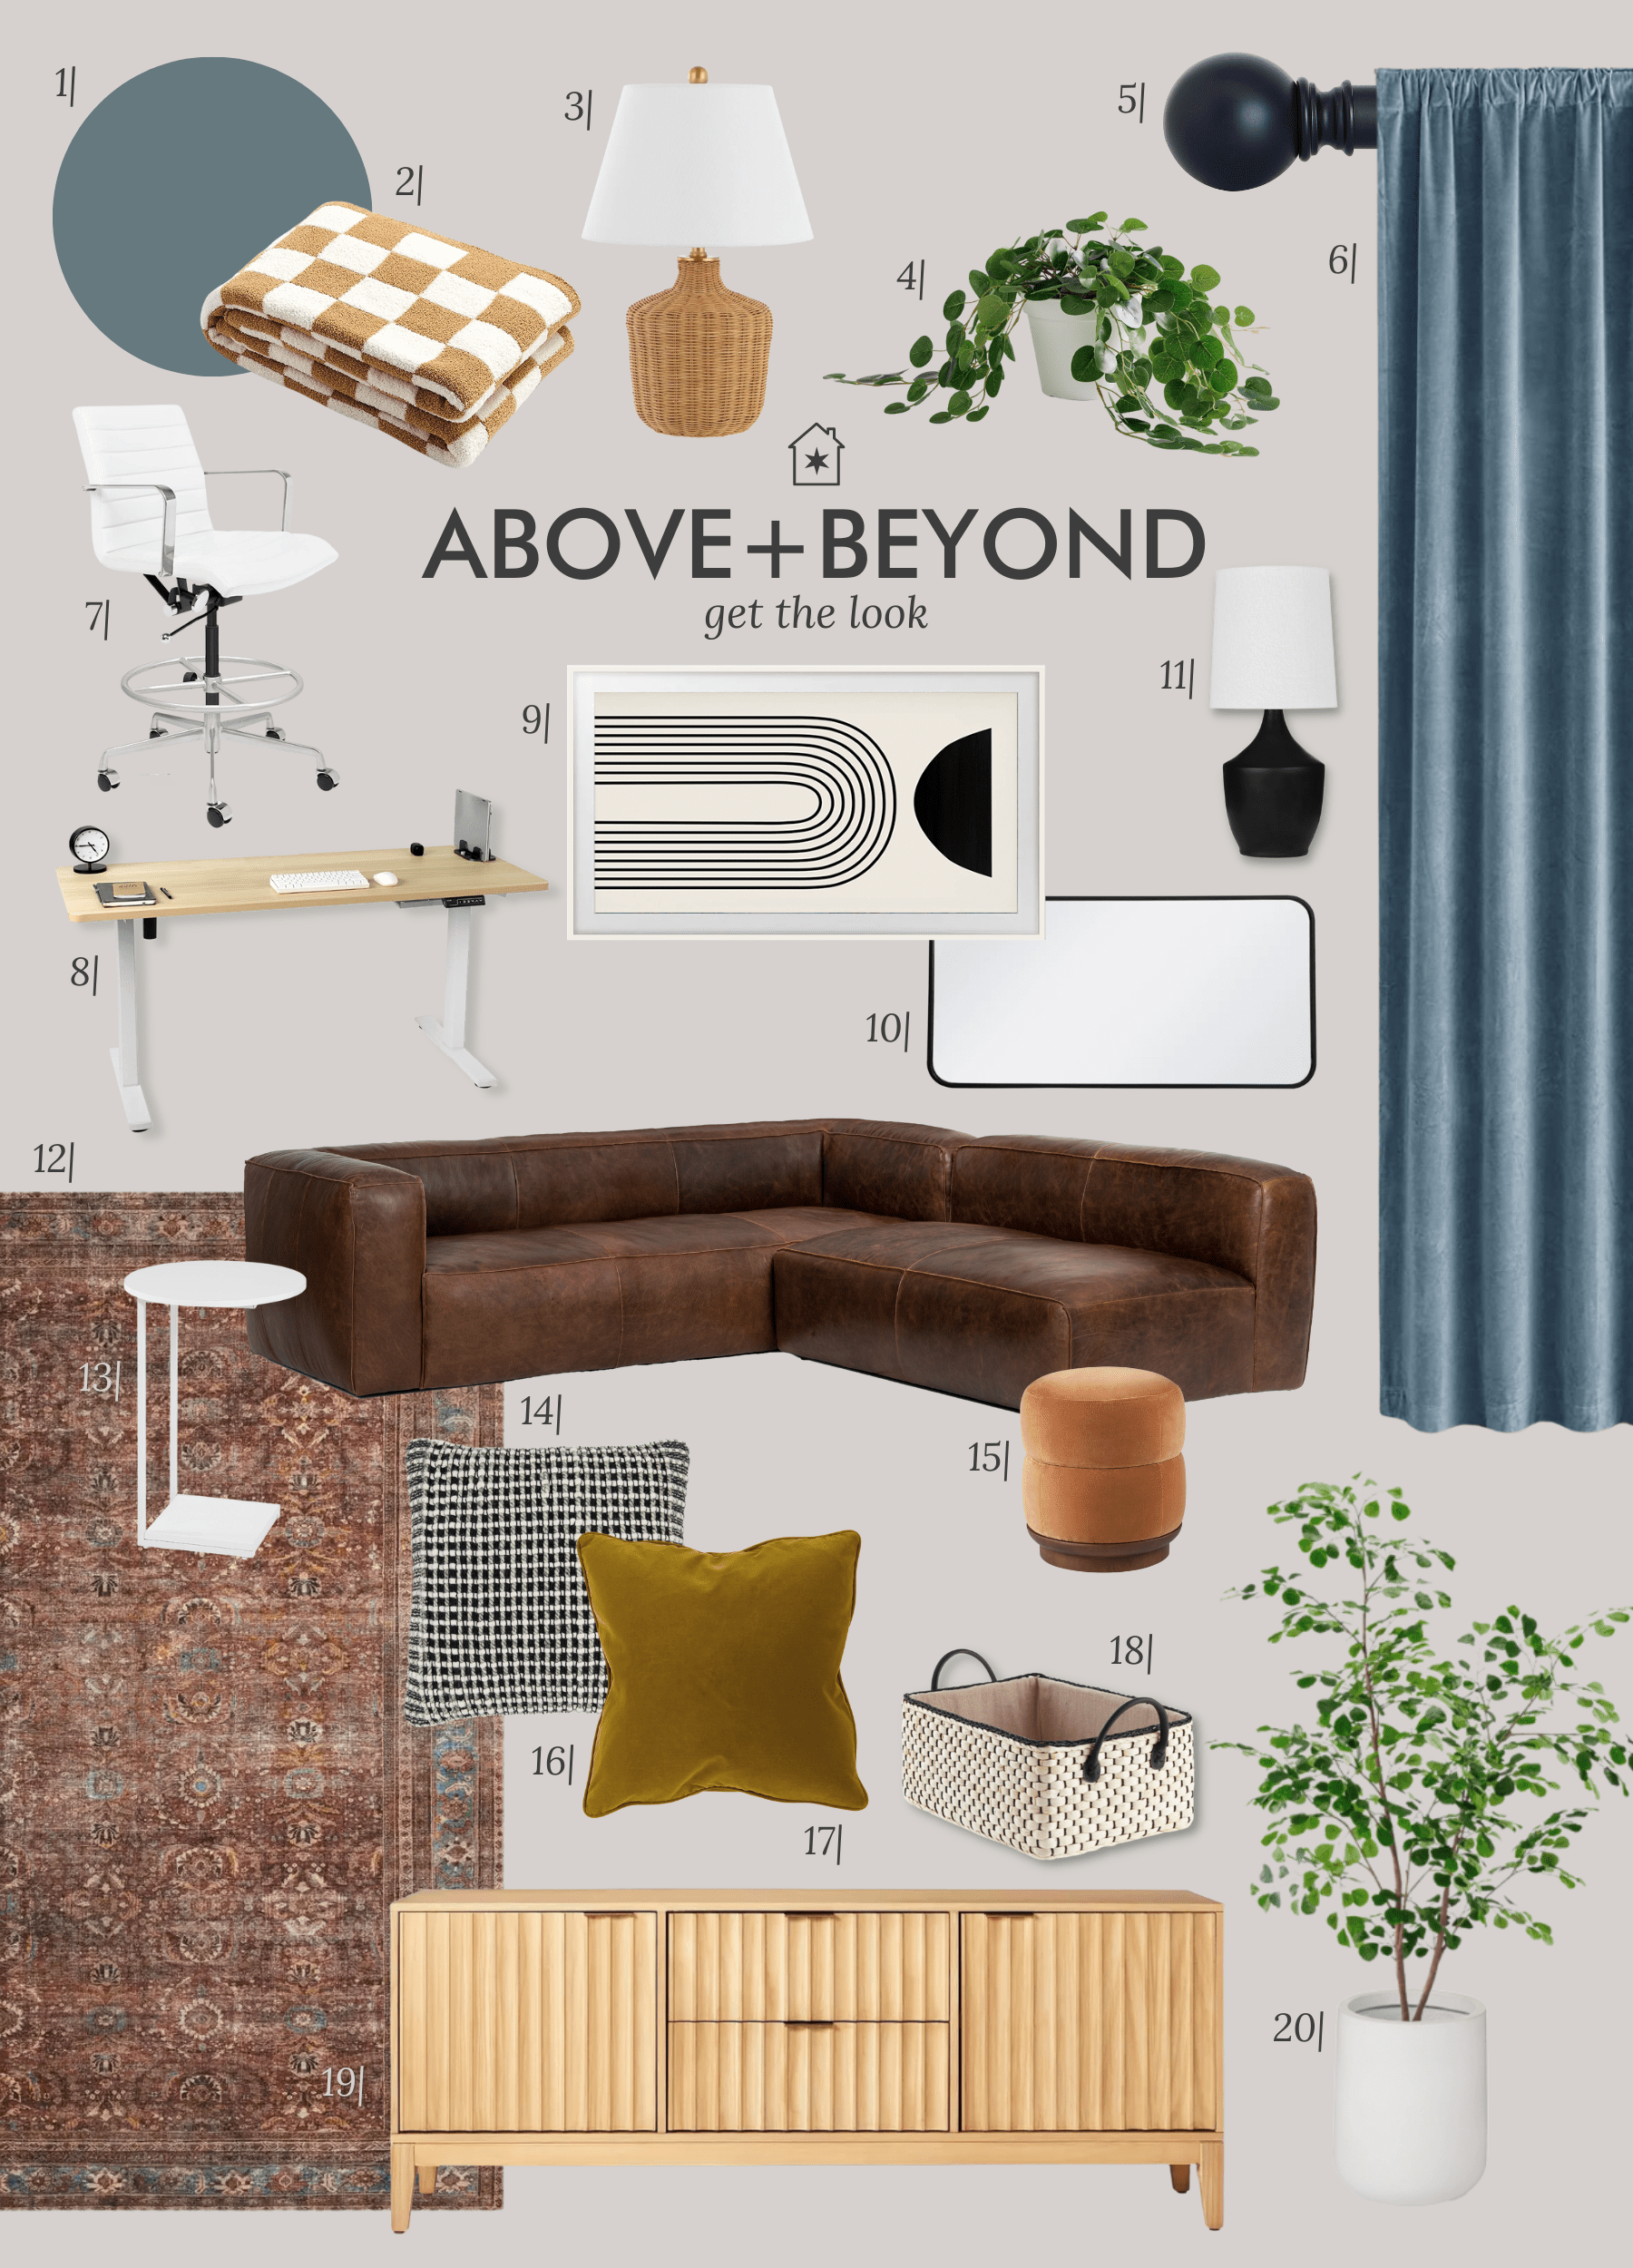 The Above + Beyond mood board // via Yellow Brick Home